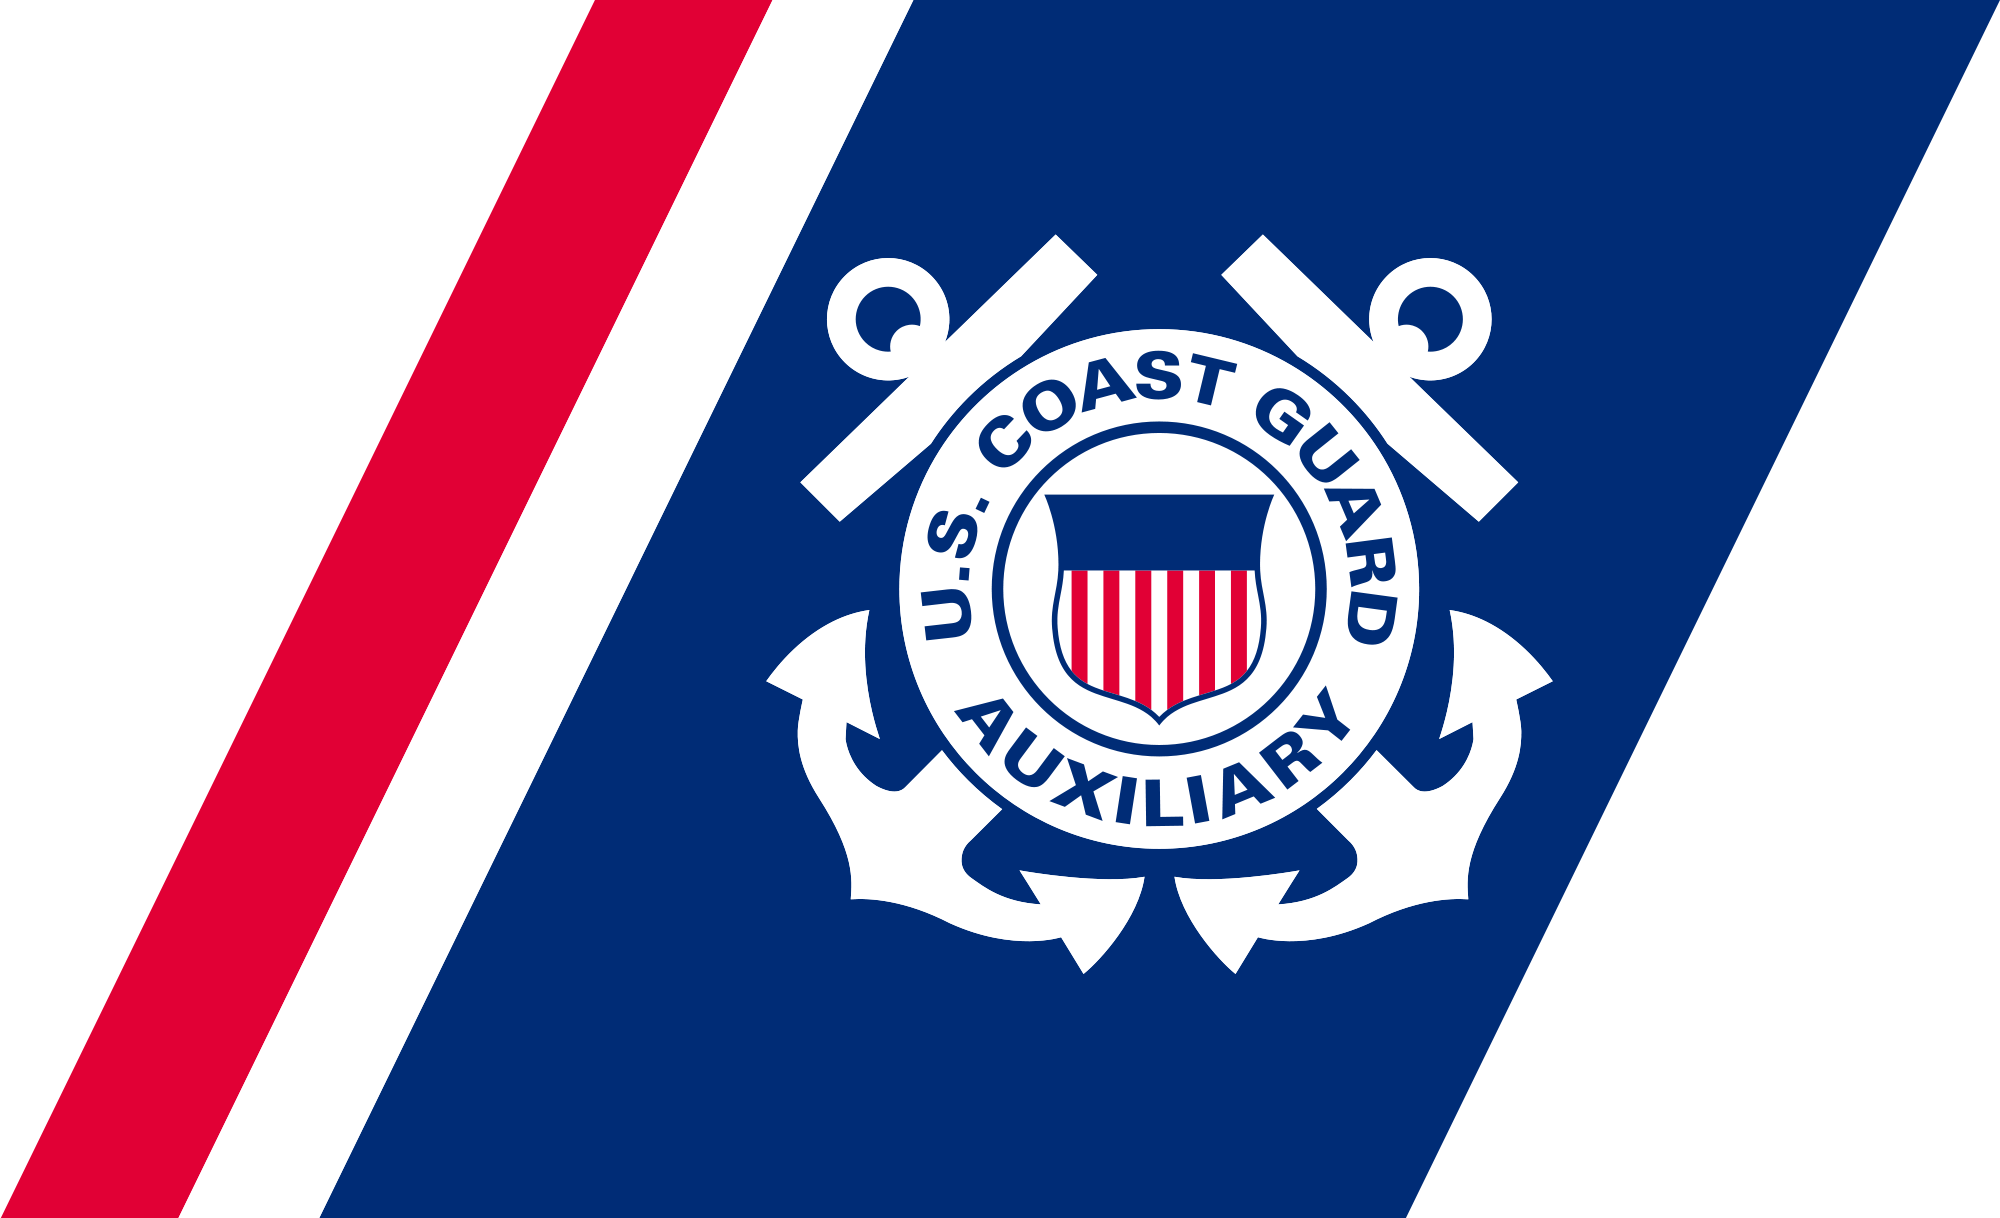 Coast guard coastguard military wallpaperx1218